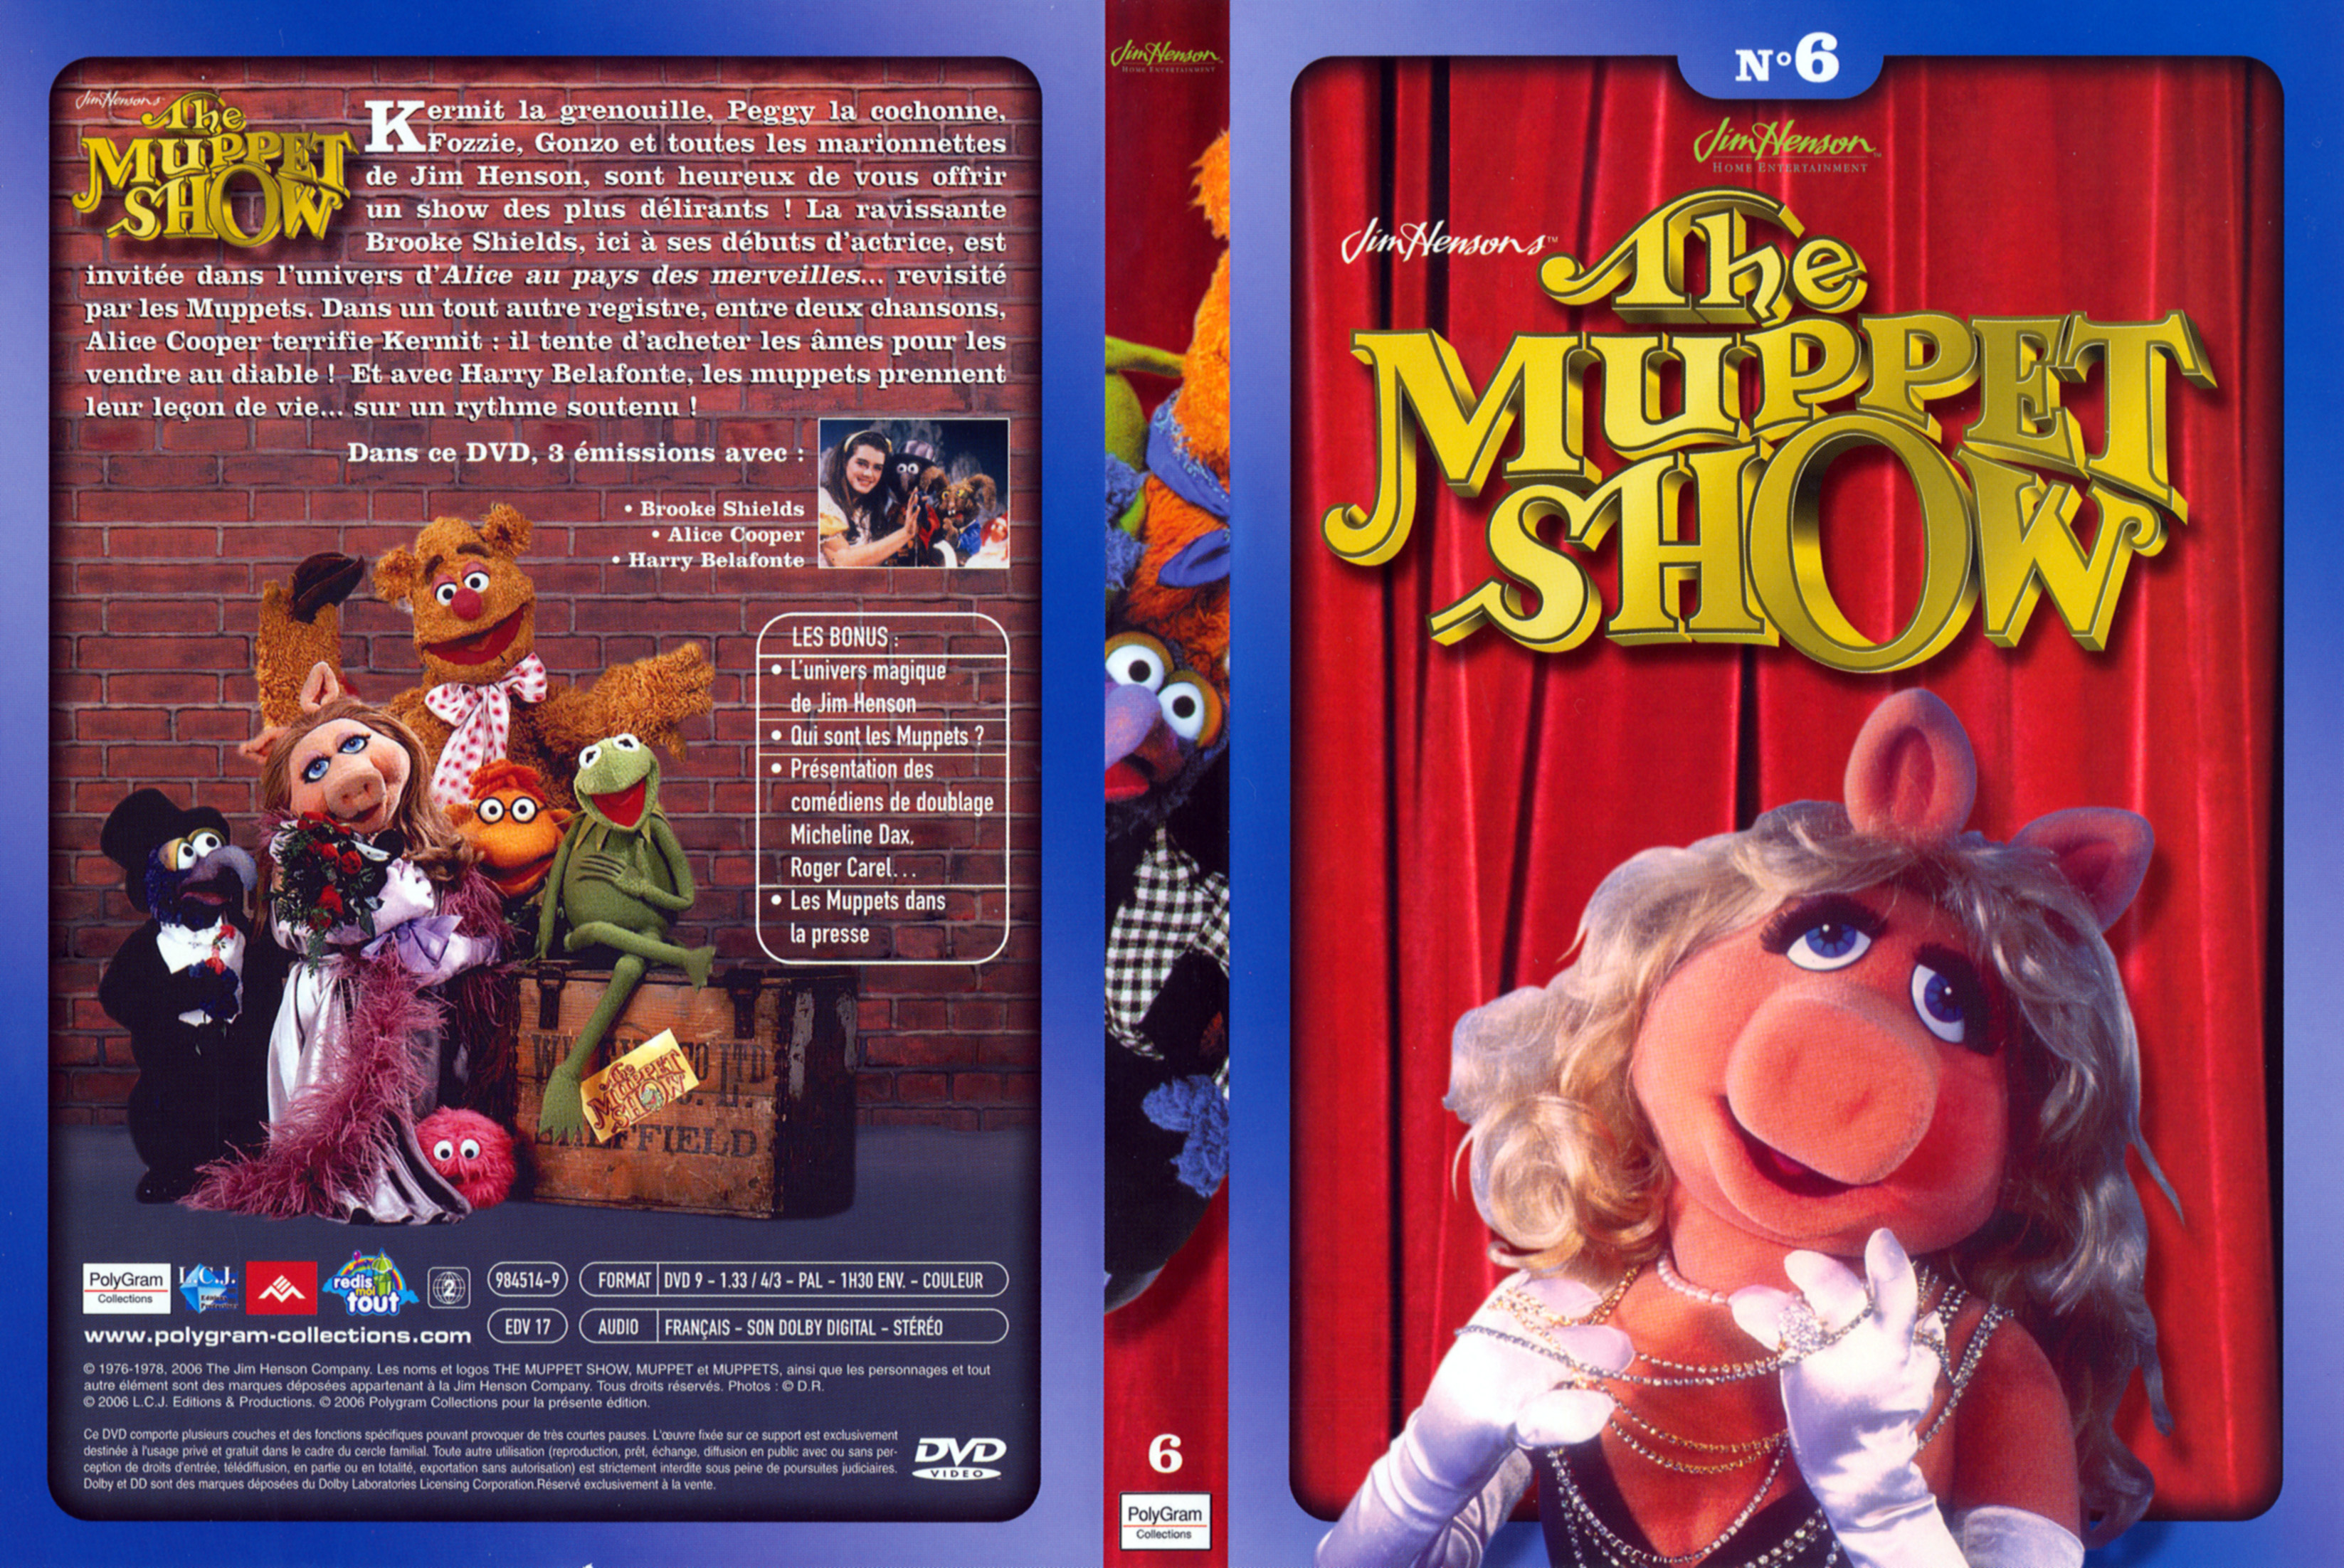 Jaquette DVD The muppet show vol 6